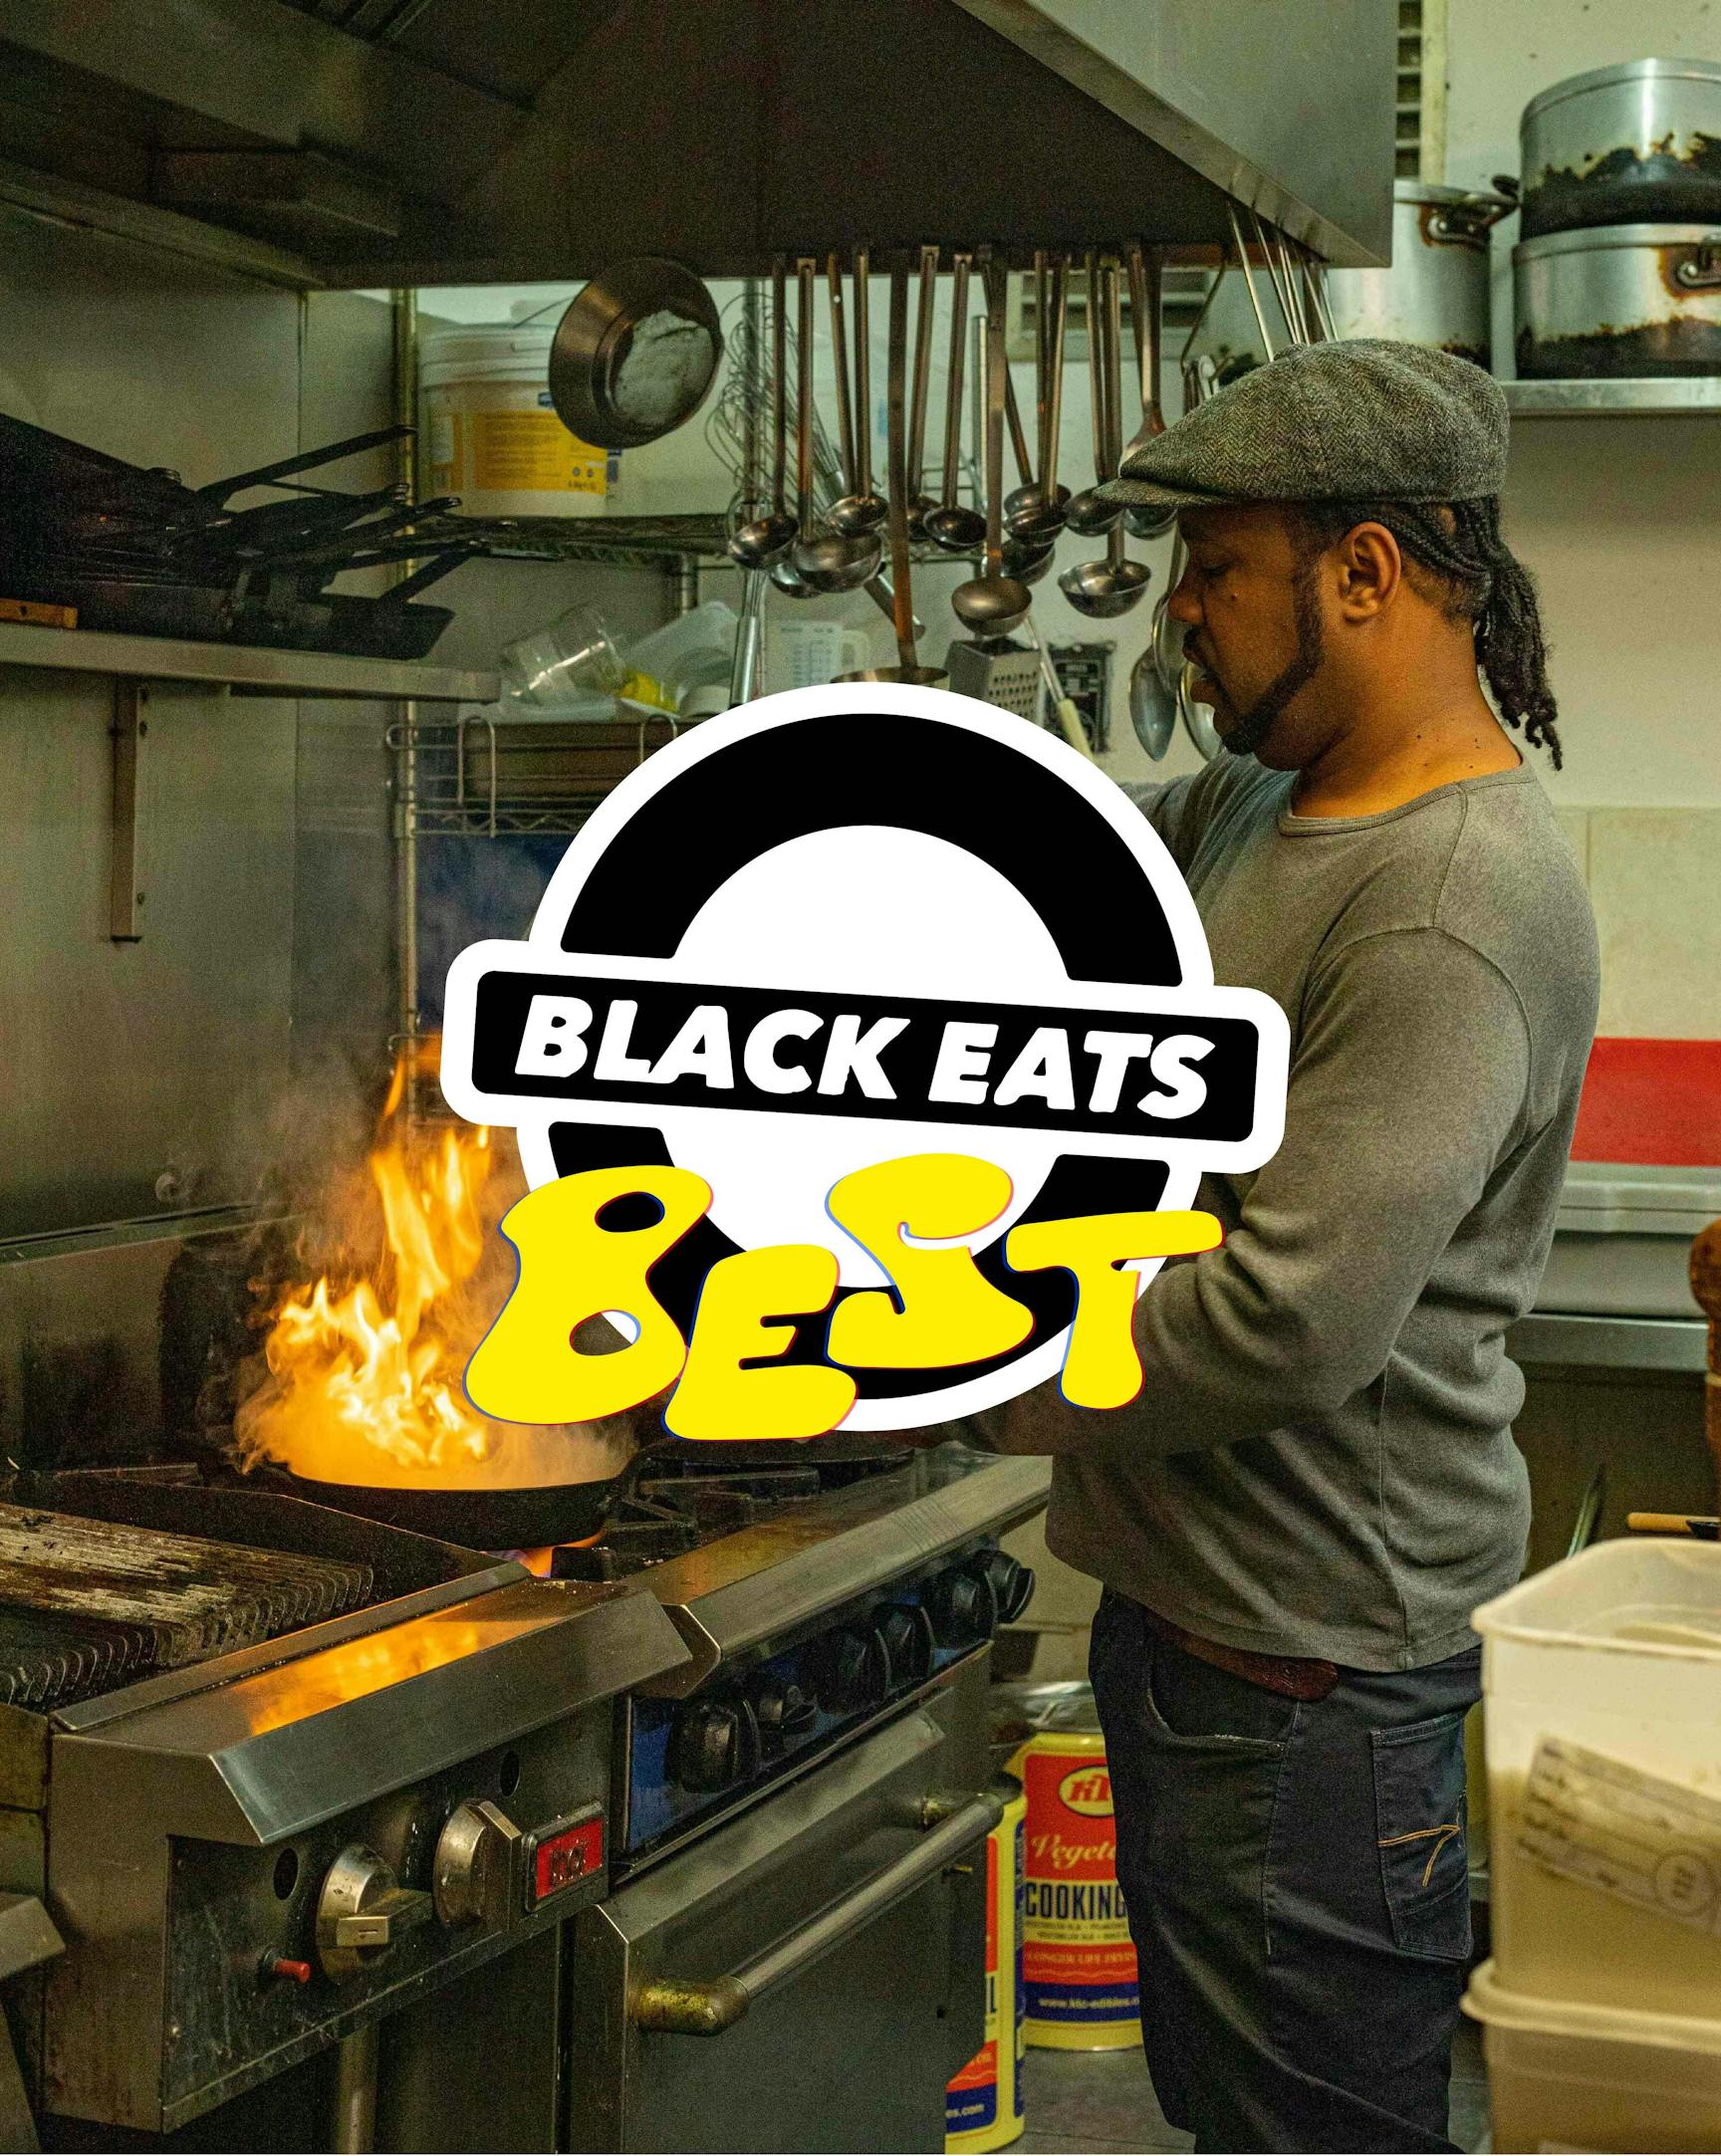 BLACK EATS BESTS Rog